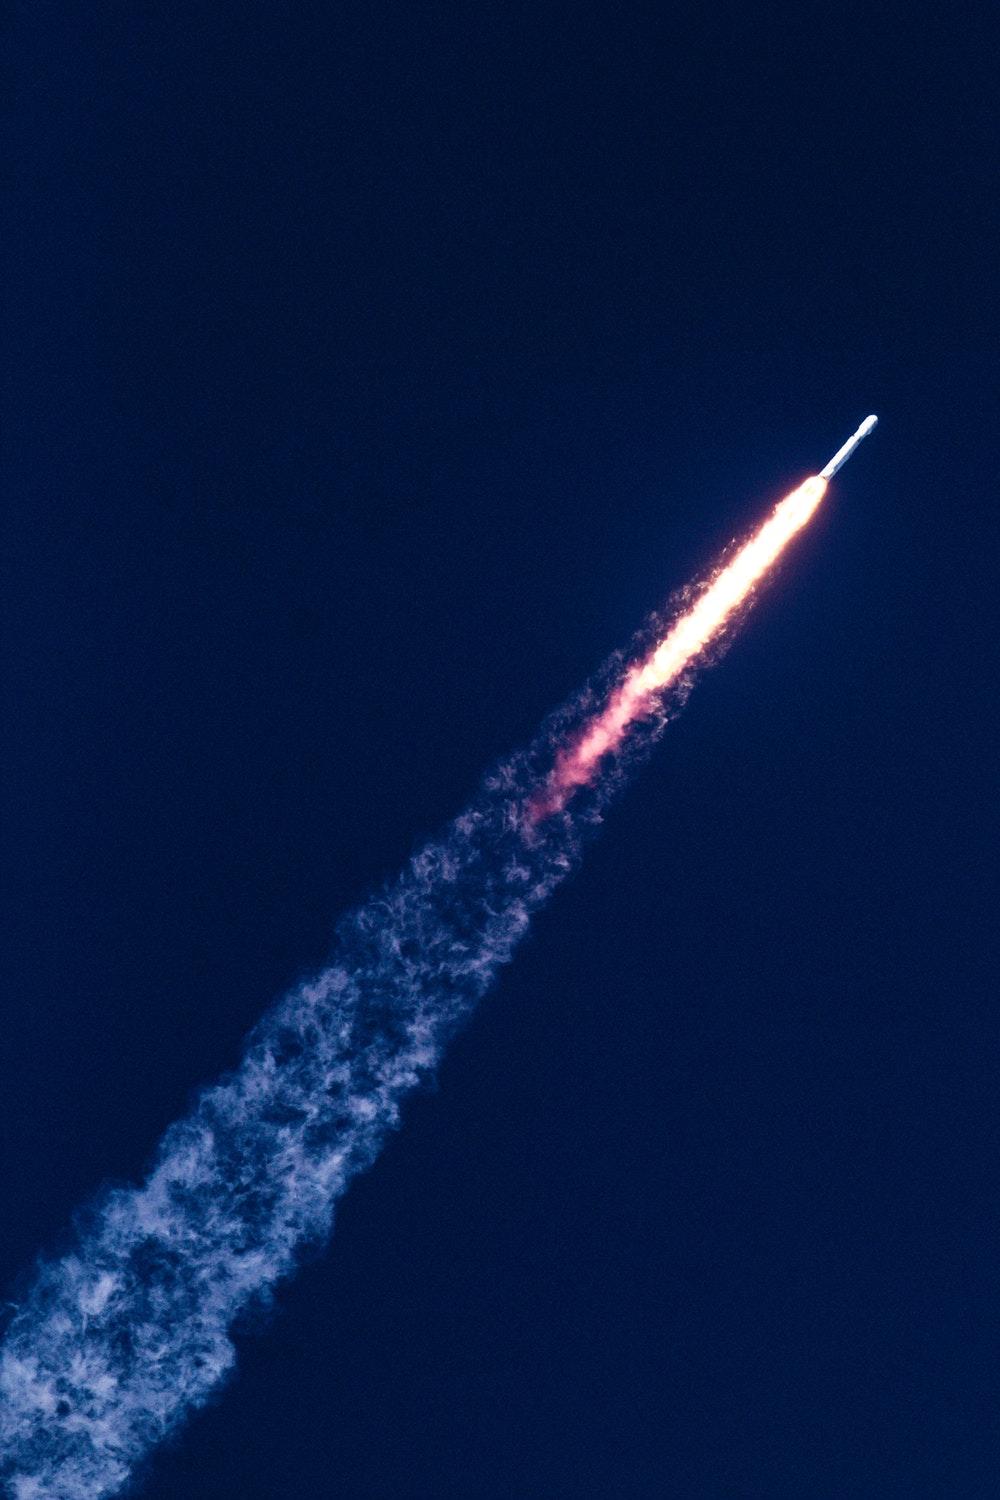 Falcon Heavy Picture. Download Free Image